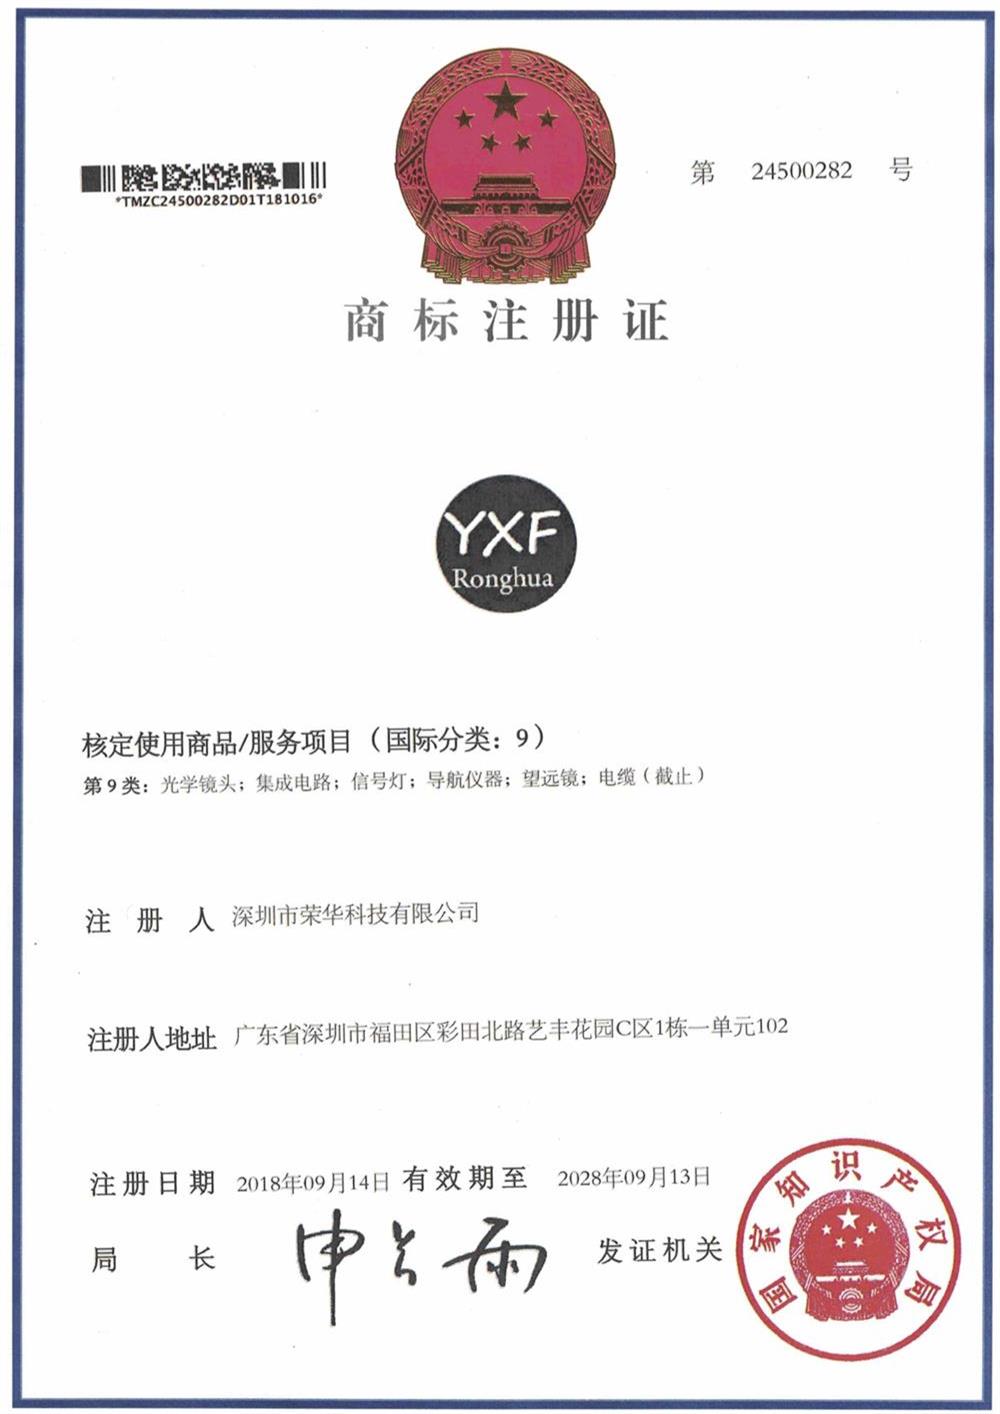 YXF ronghua